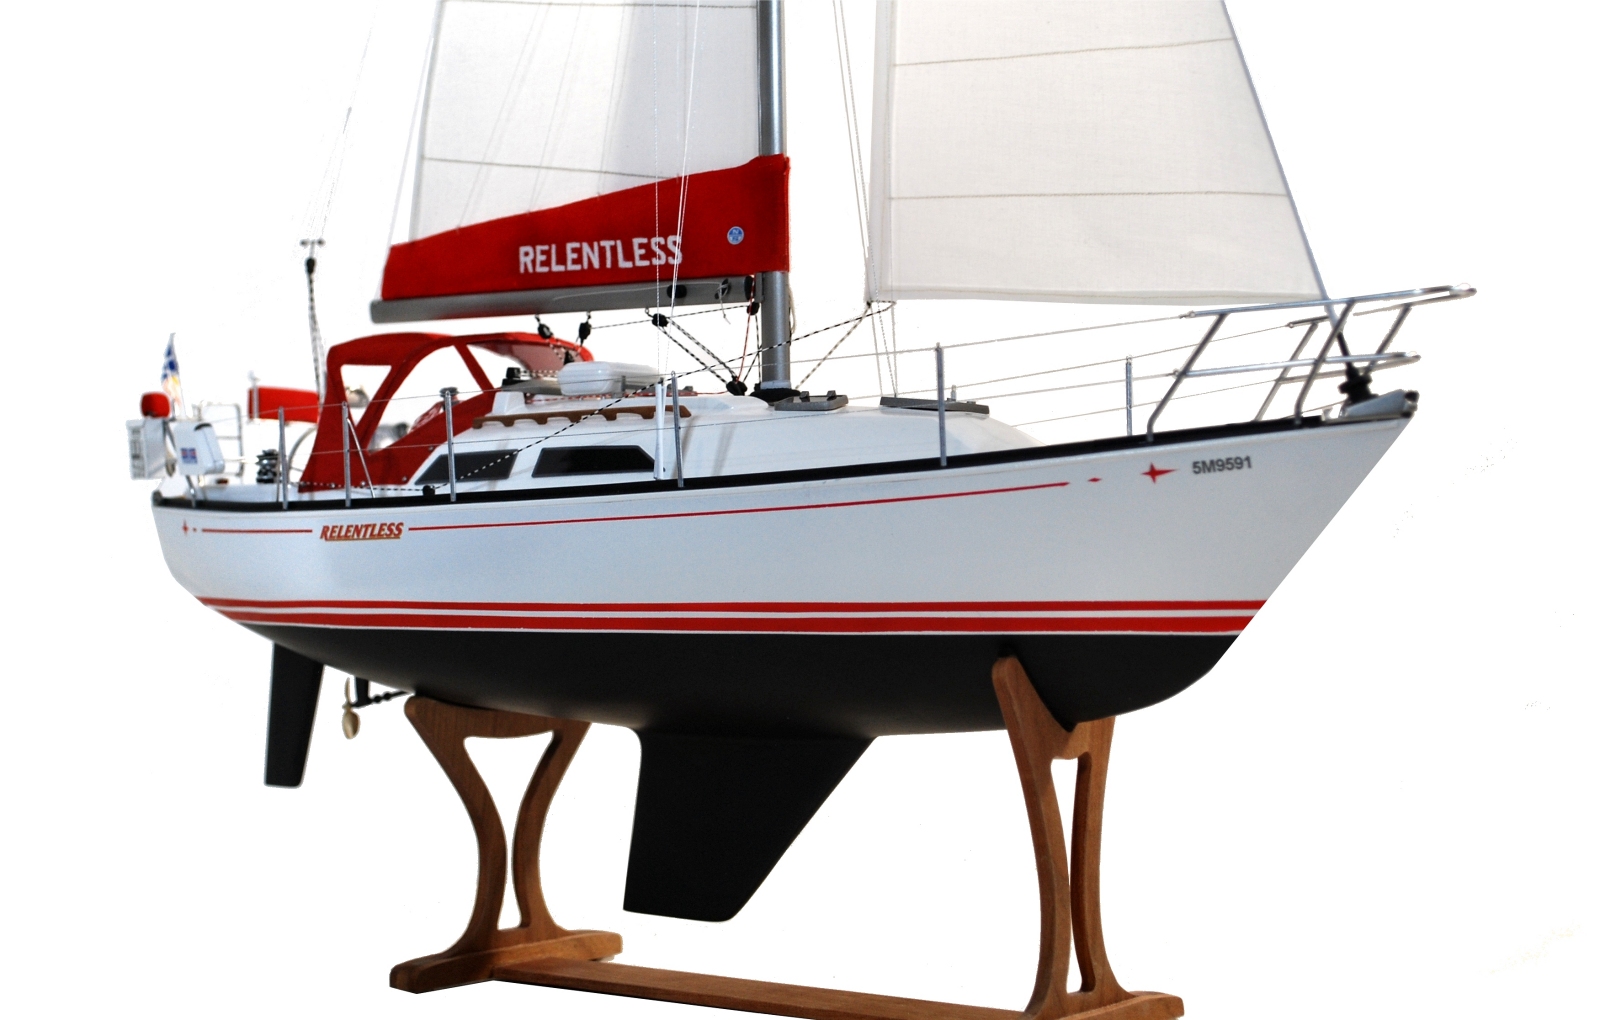 Image of C&C 32 sailboat model